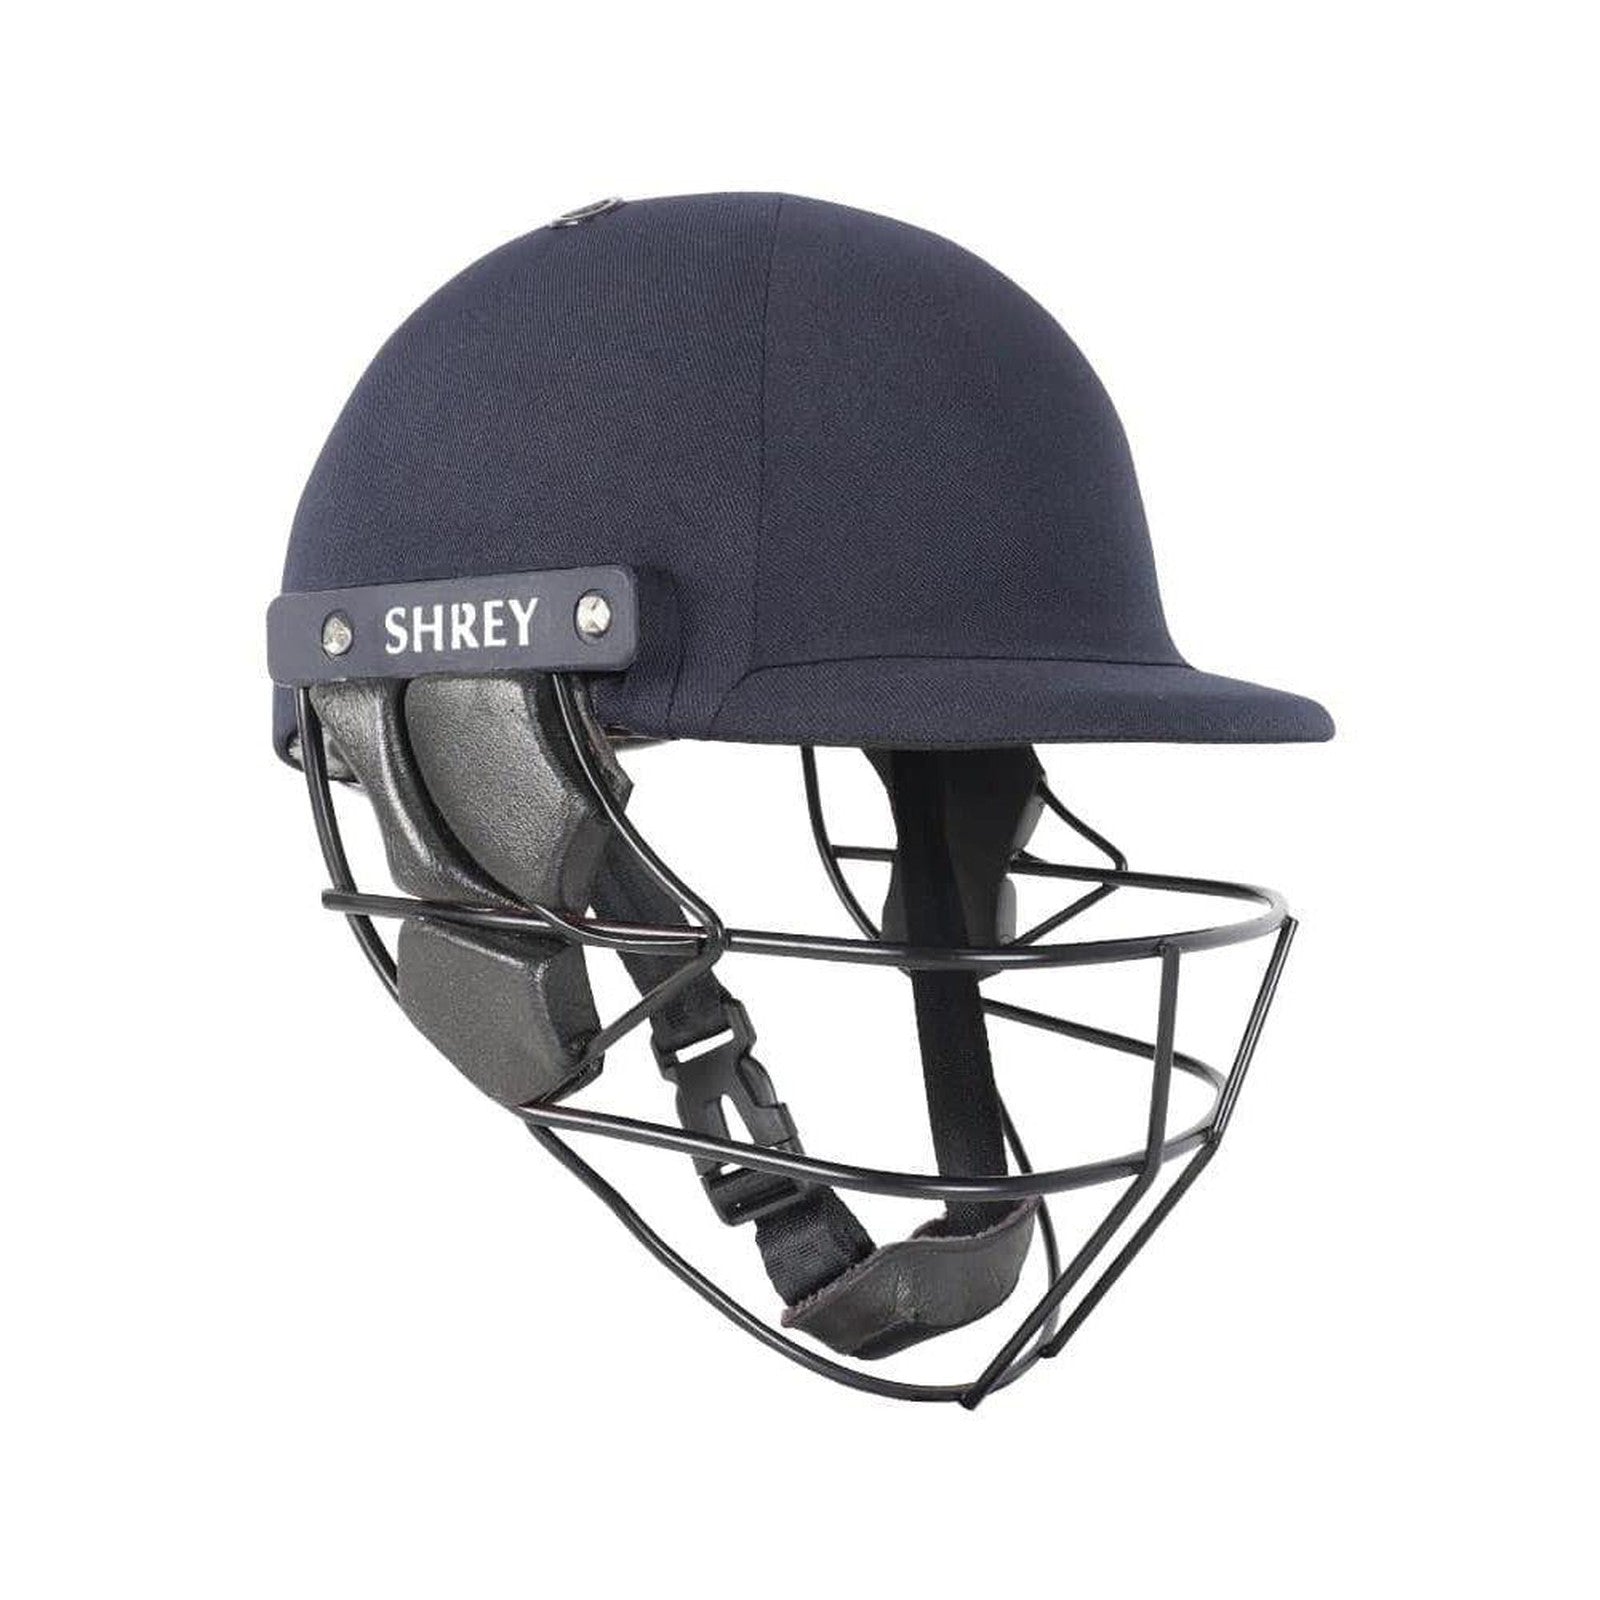 Shrey Armor 2.0 Cricket Helmet With Mild Steel Visor - Navy Junior